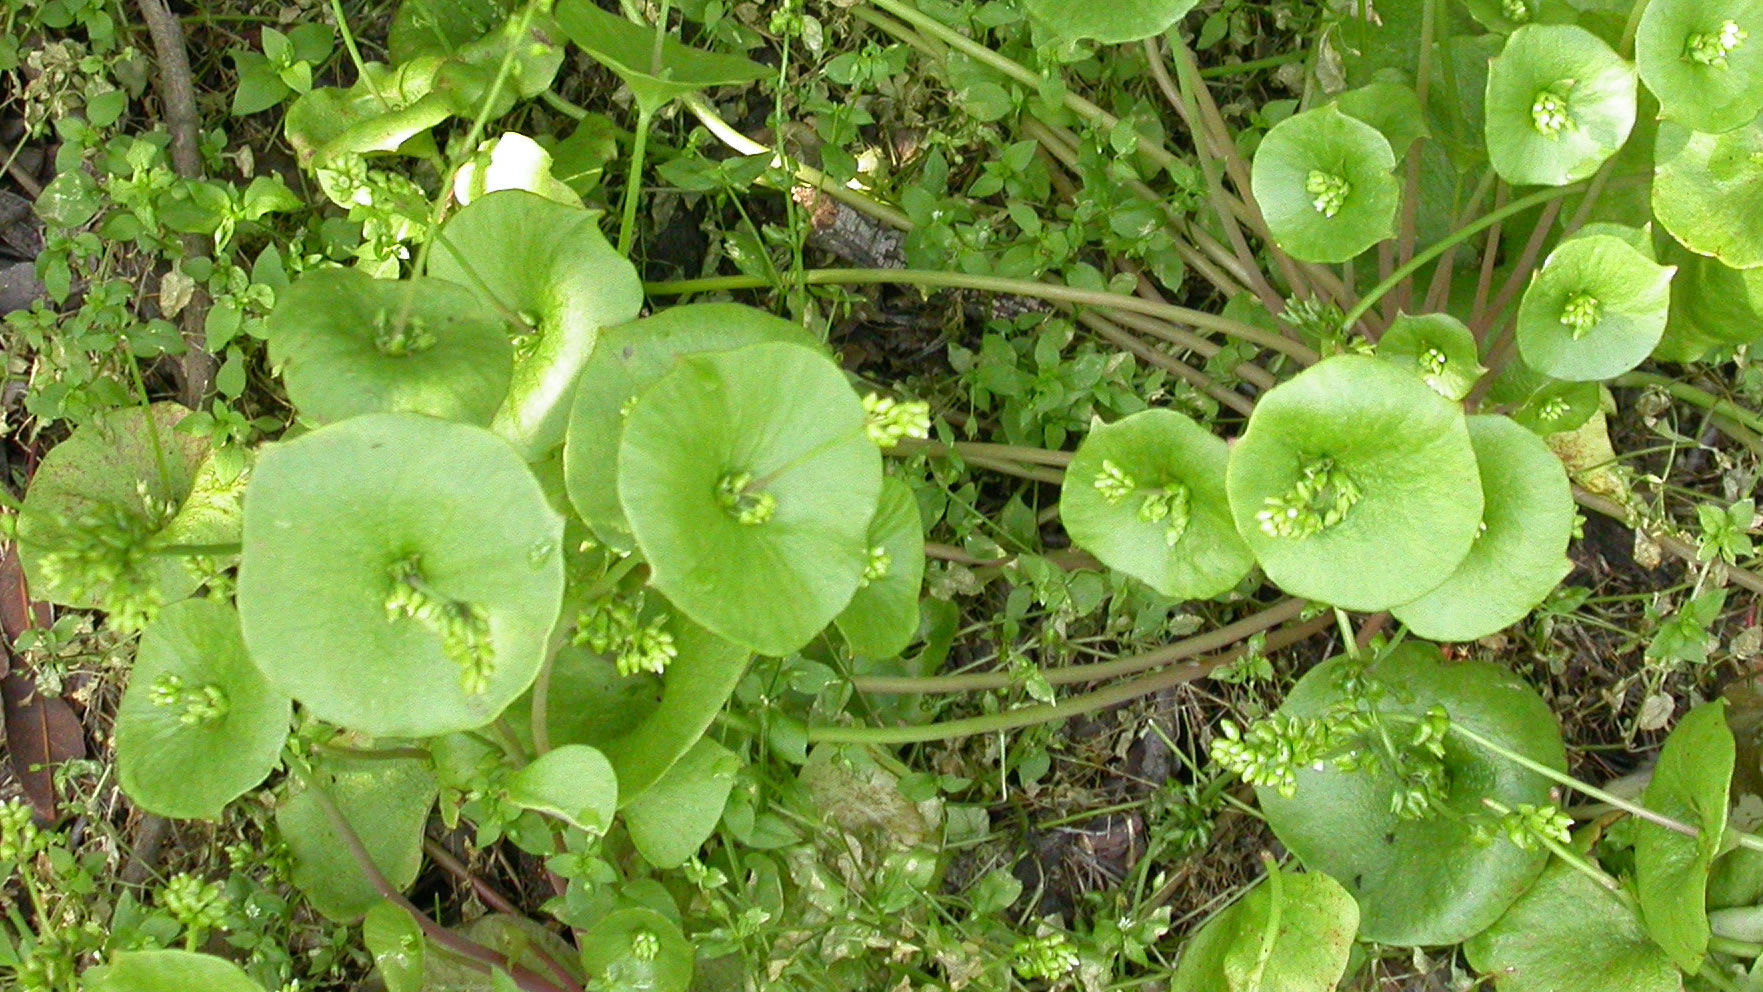 Claytonia perfoliata. An annual edible, native ground cover option.